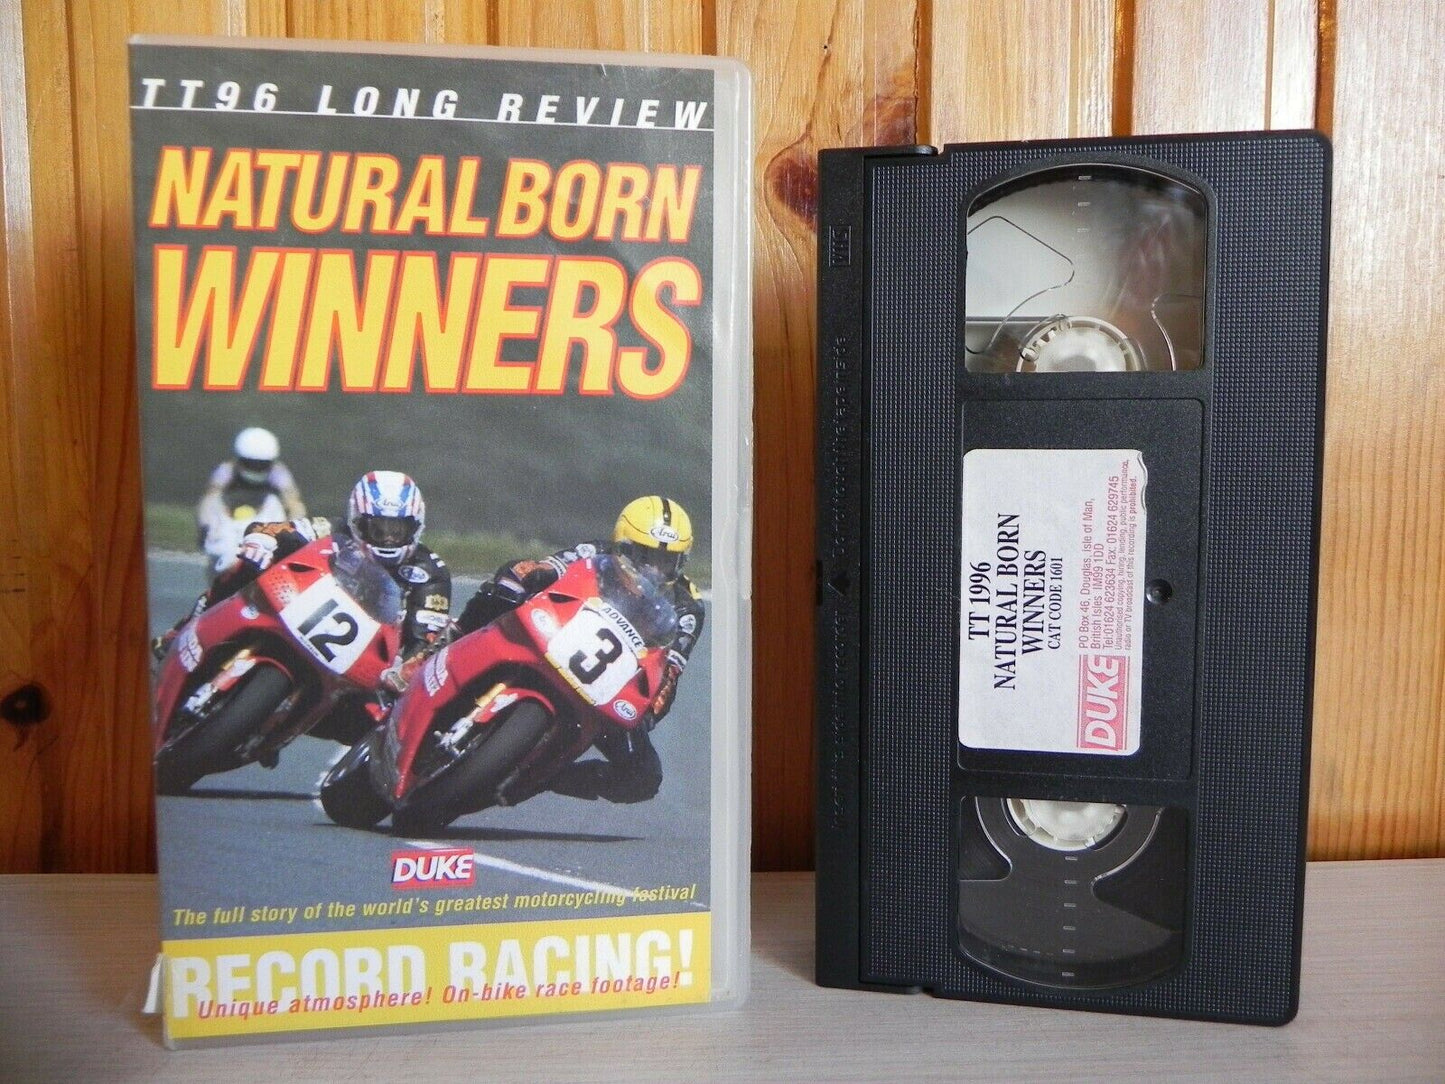 Natural Born Winners - TT96 Long Review - Record Racing - Motorcycle - Pal VHS-